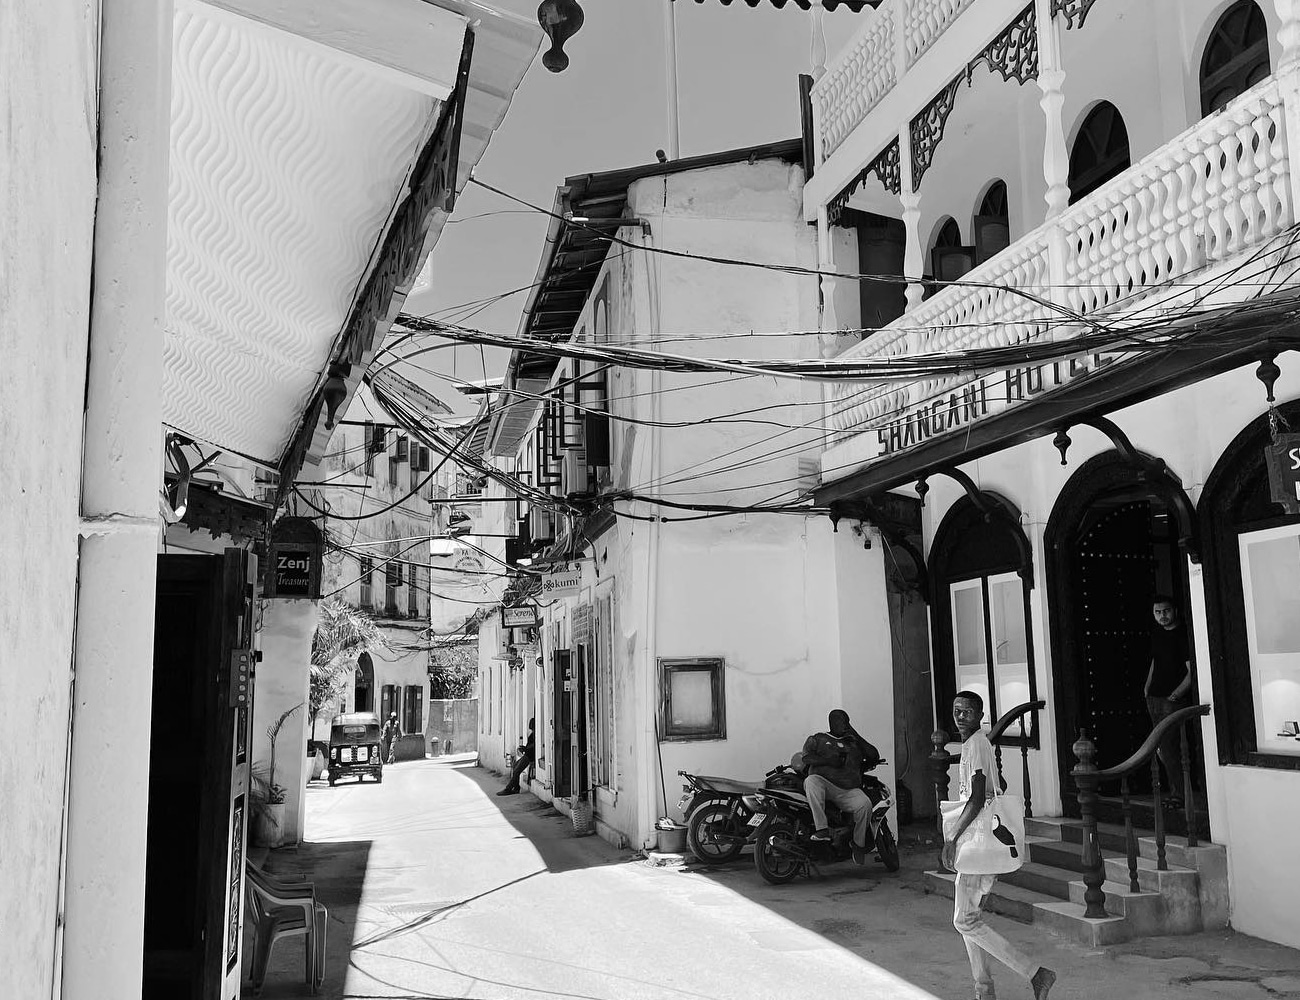 The Historic Stone Town in Zanzibar